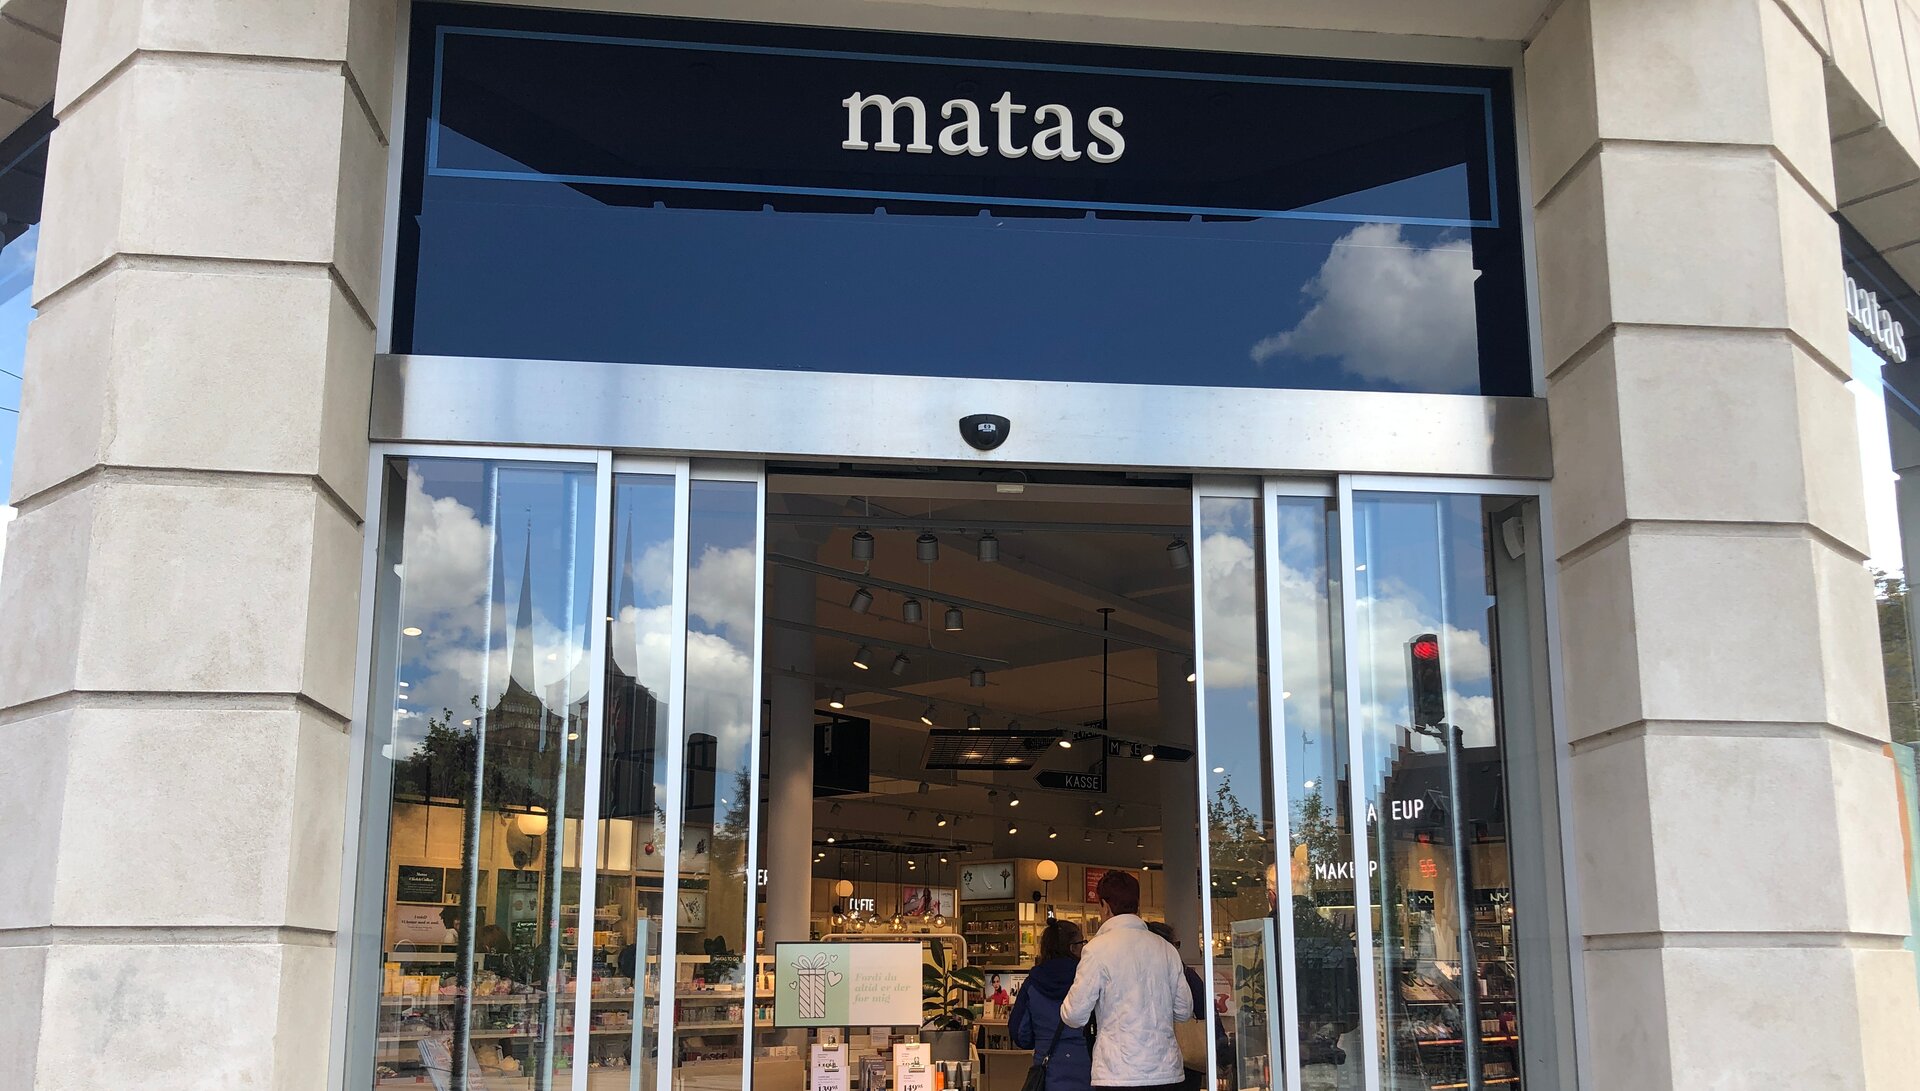 Matas offers unique customer experiences across platforms